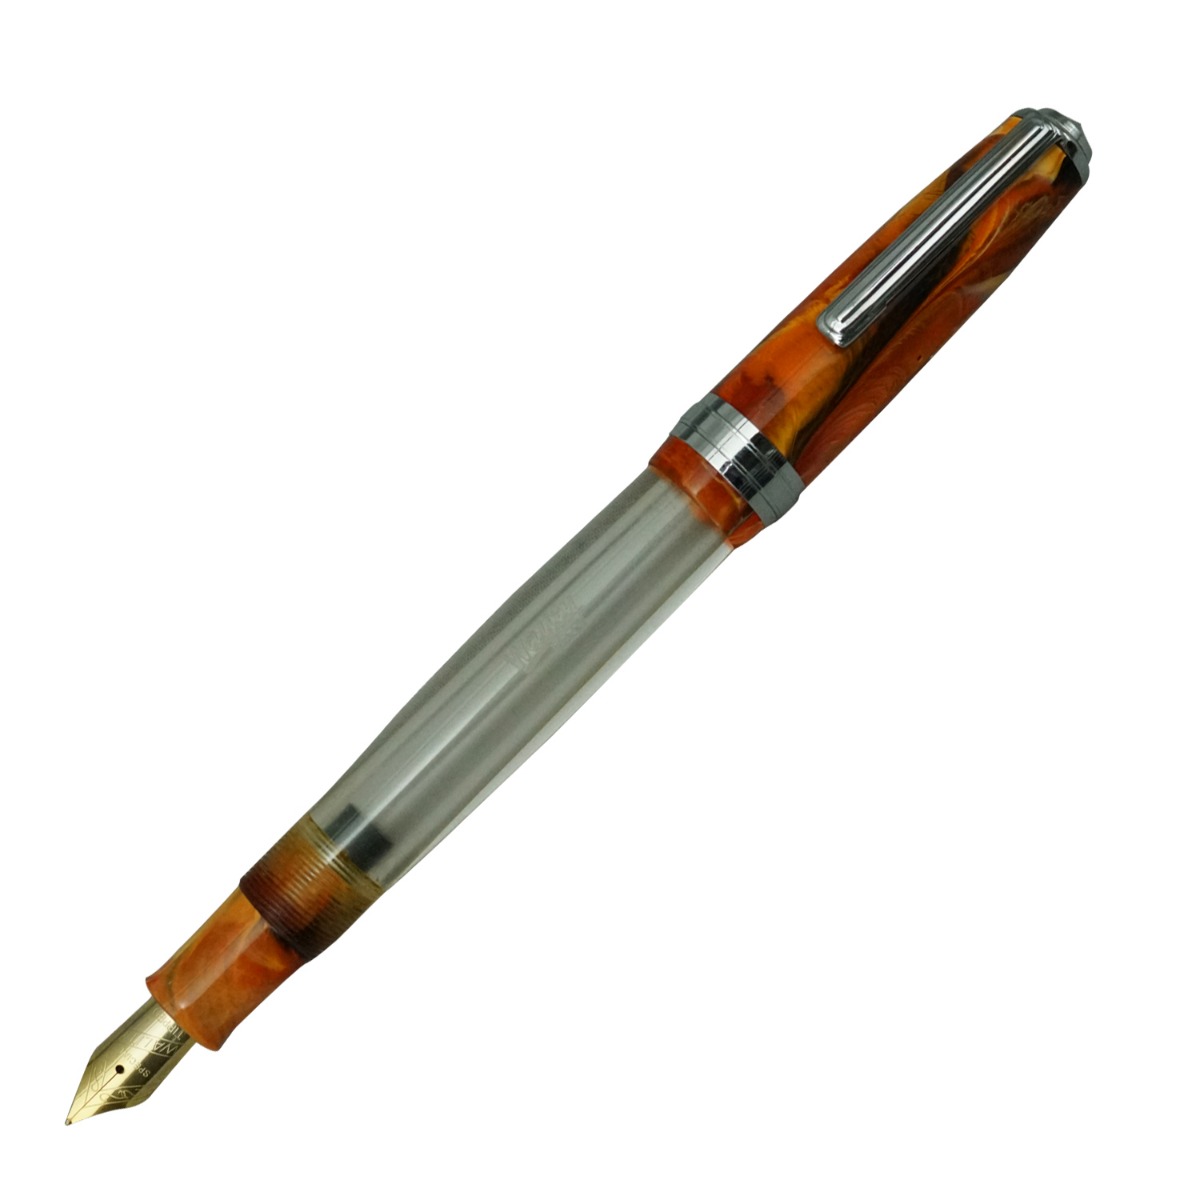 Wality Airmail 69TS  Model:16216  Orange  Color Marble Finish Cap With Clear Acrylic Eyedropper Model Fine Nib  Fountain Pen